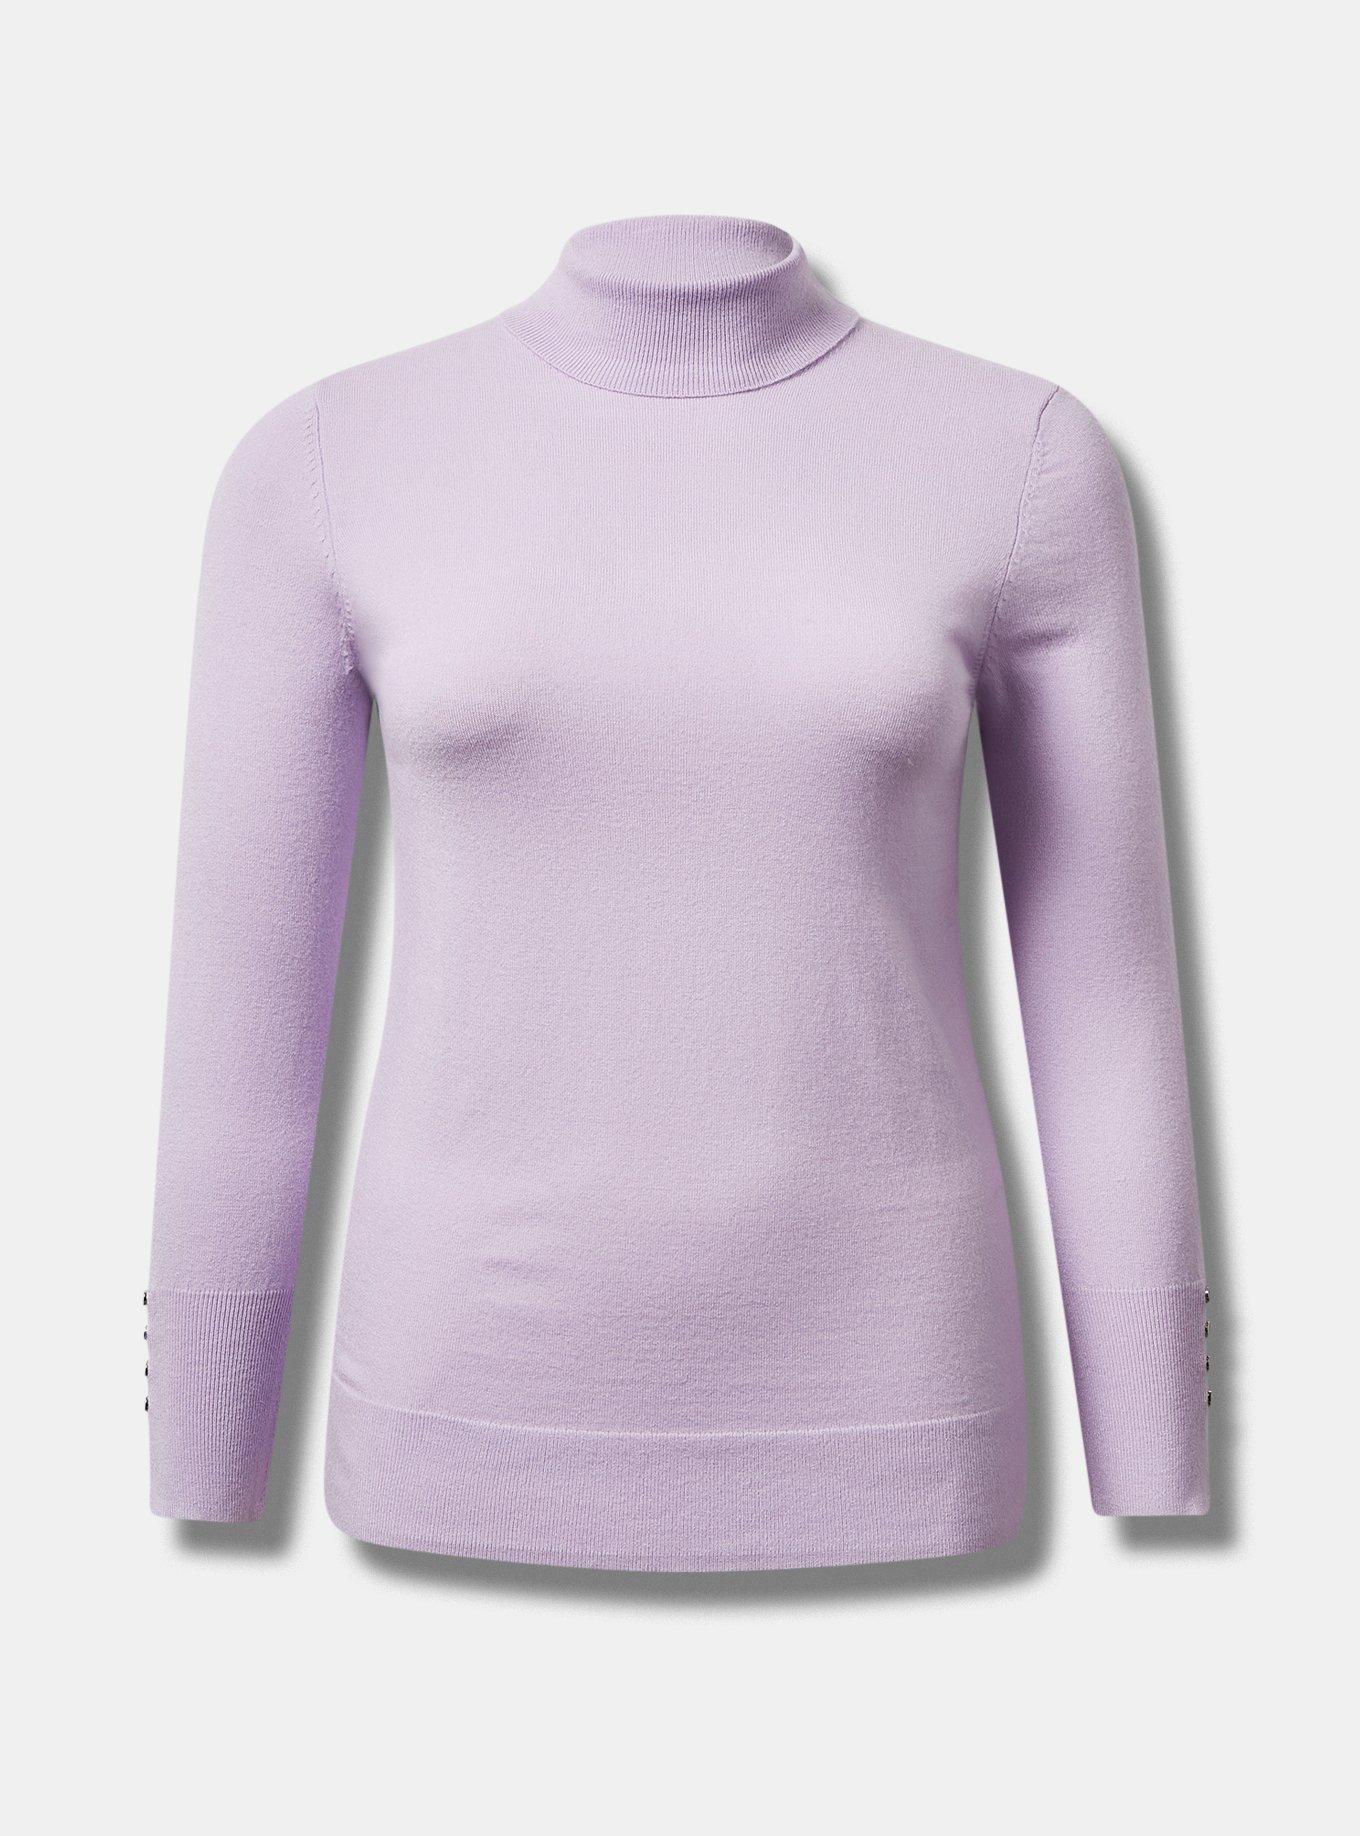 Plus Size - Everyday Soft Pullover Turtleneck Sweater - Torrid